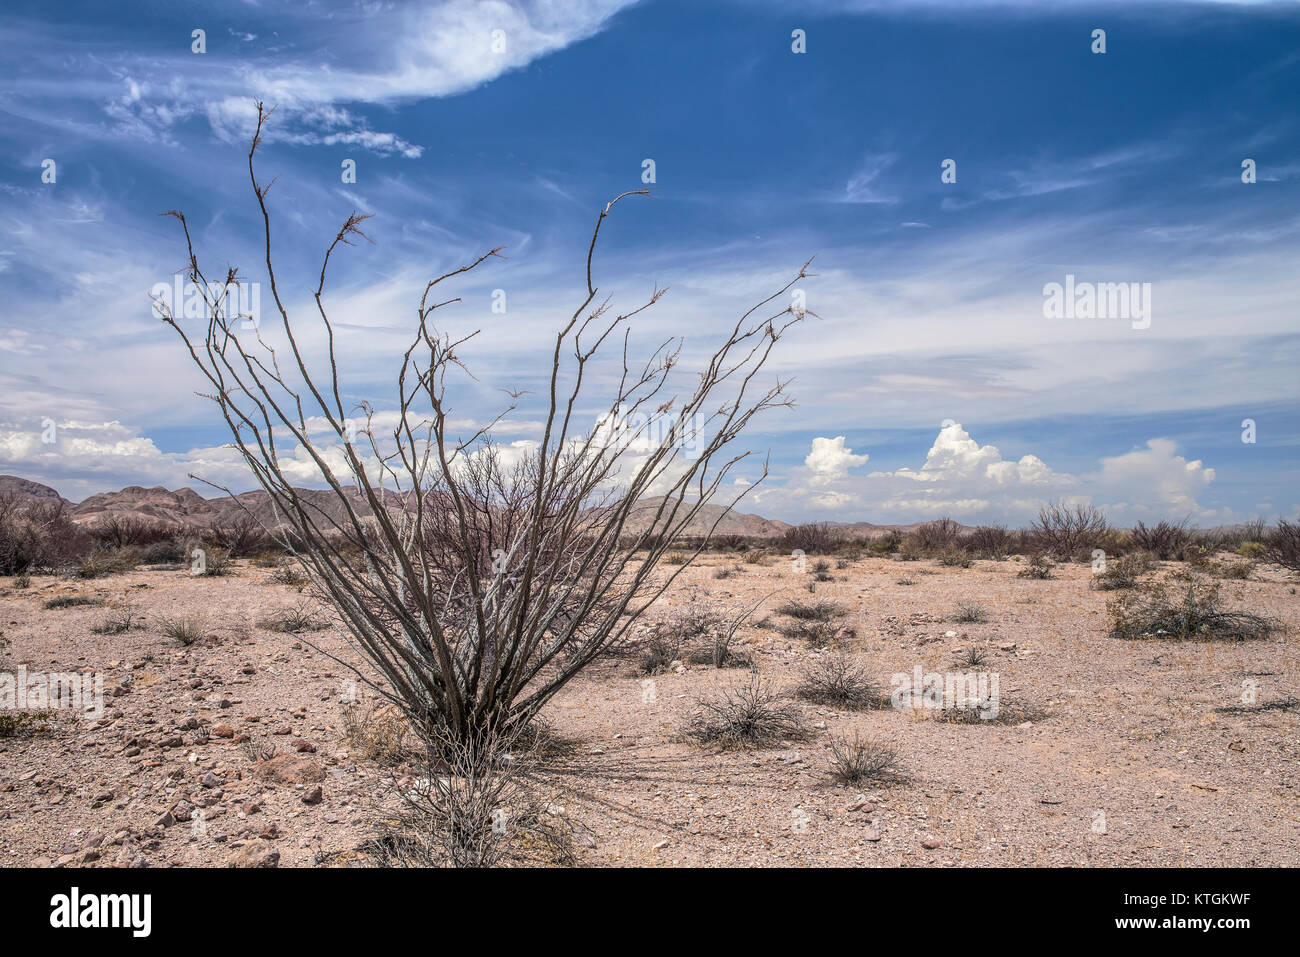 landscapes of baja california and baja california sur desert, MEXICO Stock Photo